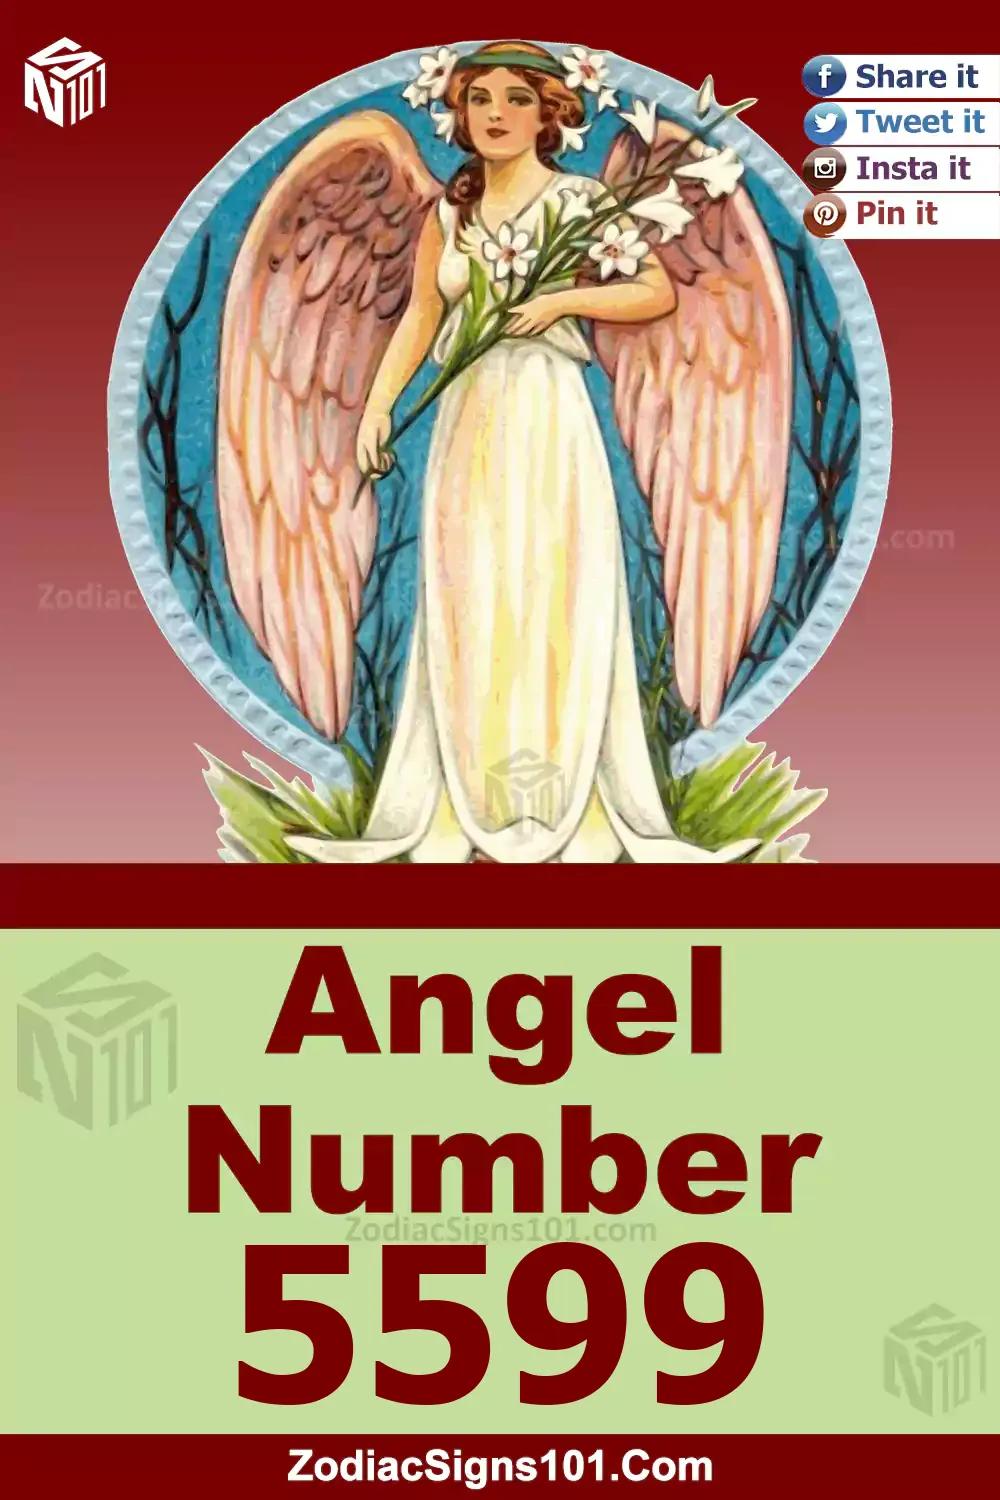 5599-Angel-Number-Meaning.jpg